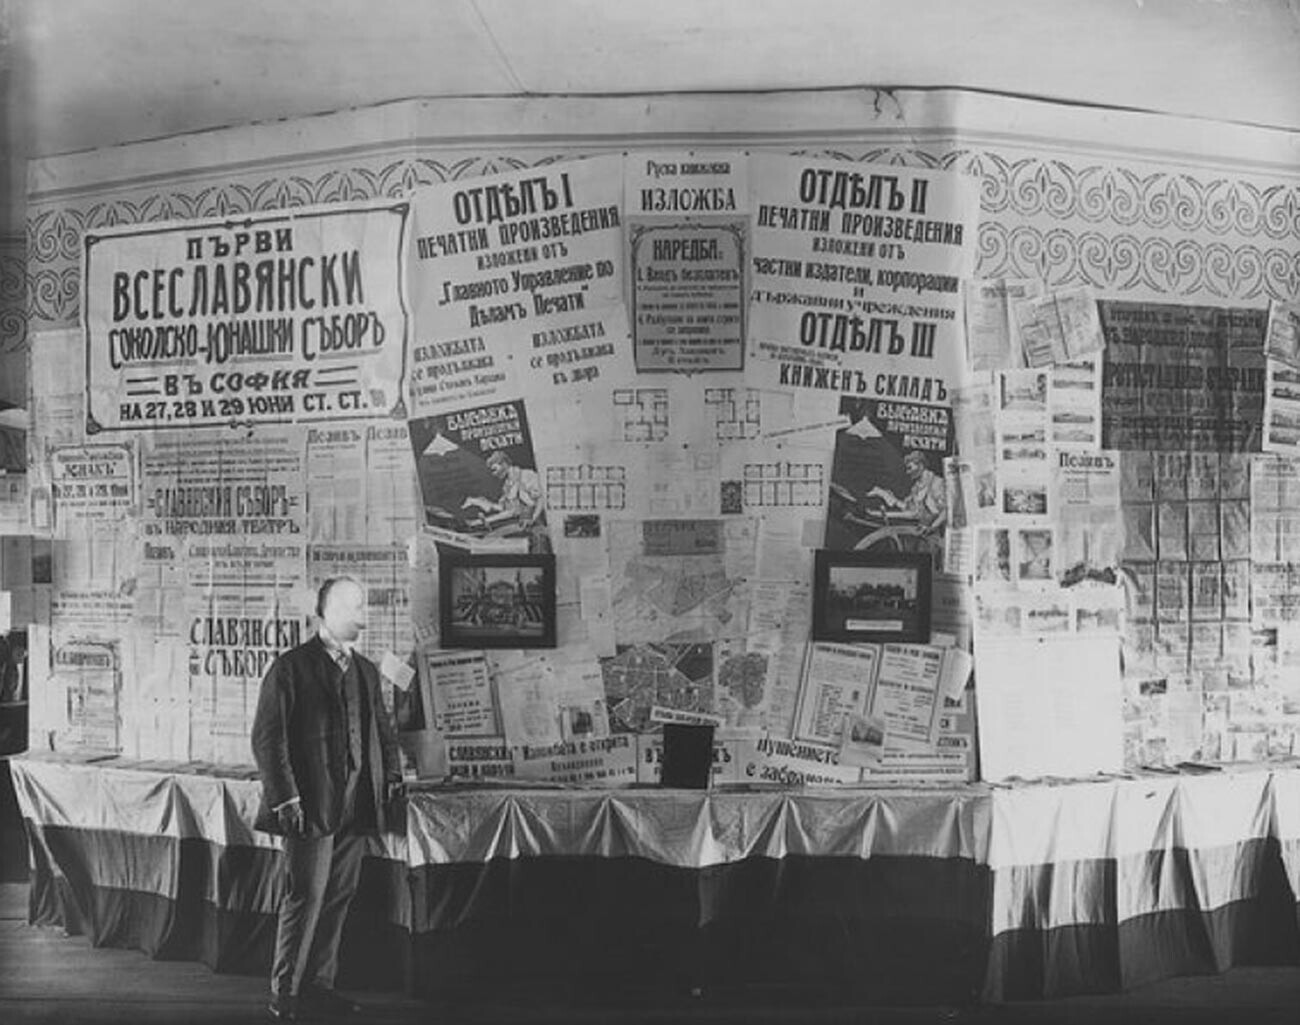 Razstava grafik iz leta 1910 v mestu Soljanoj.
